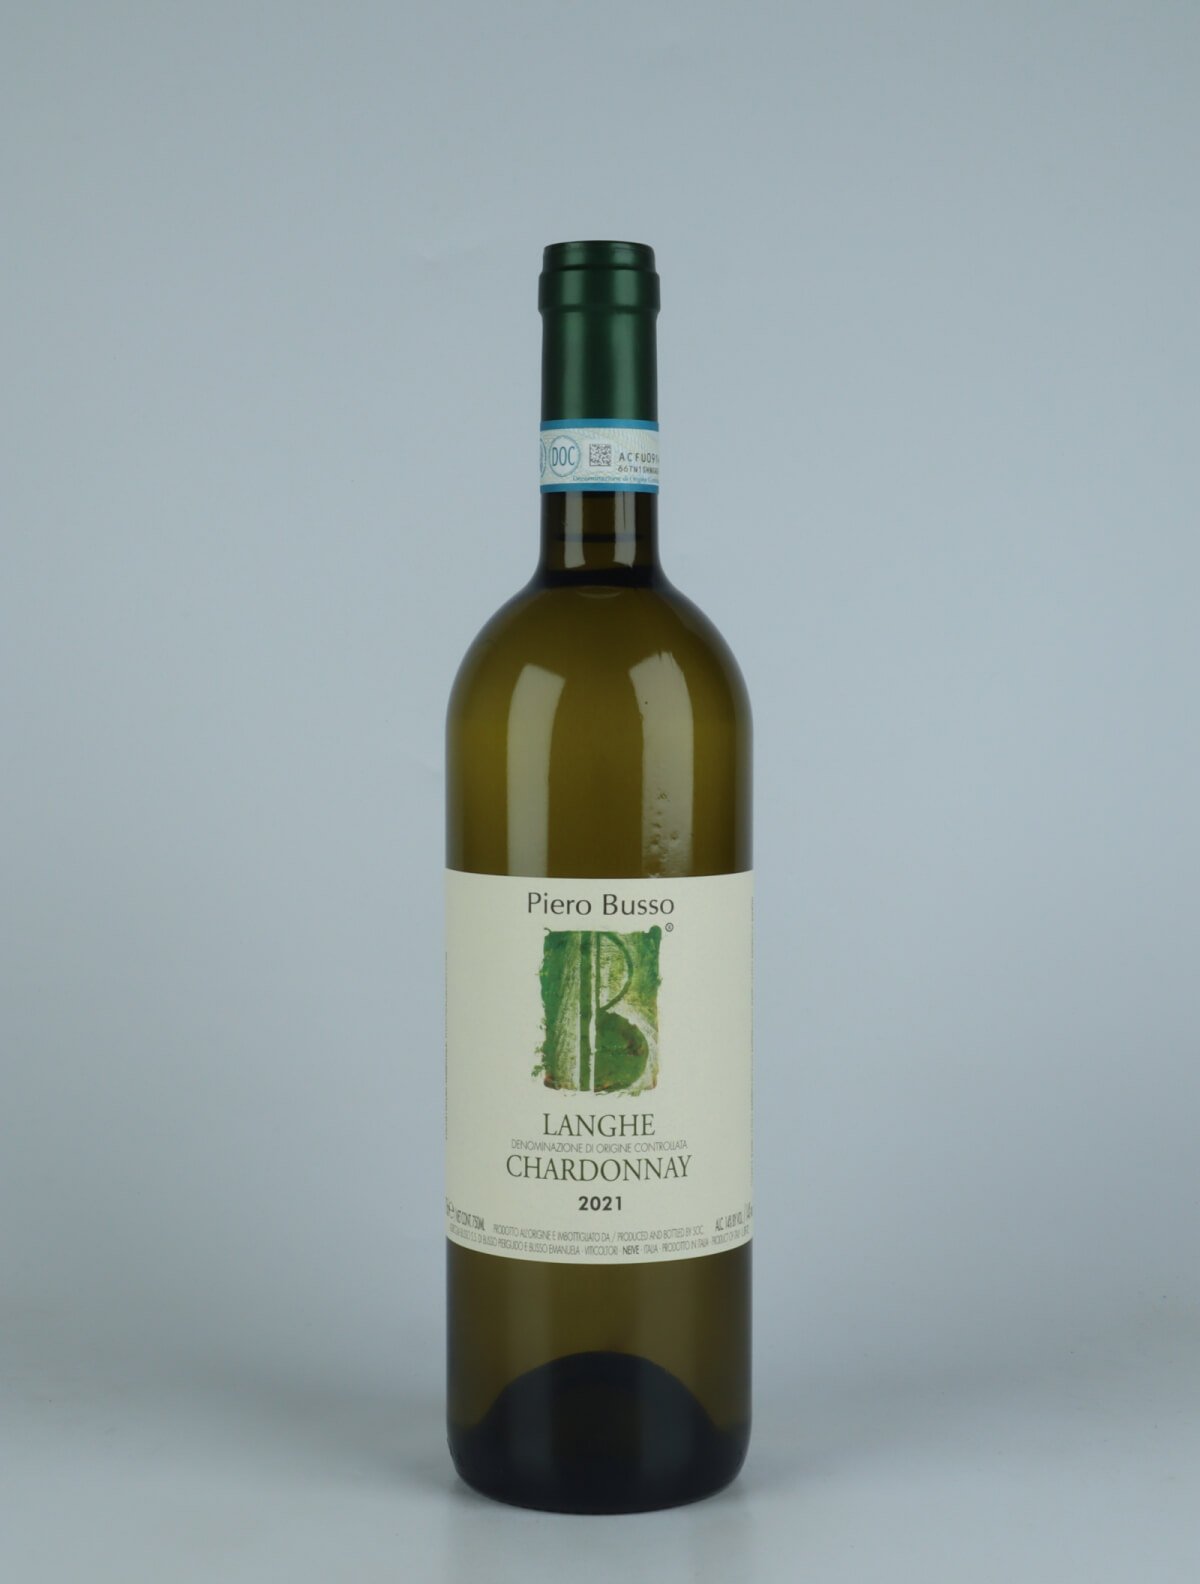 En flaske 2021 Langhe Chardonnay Hvidvin fra Piero Busso, Piemonte i Italien